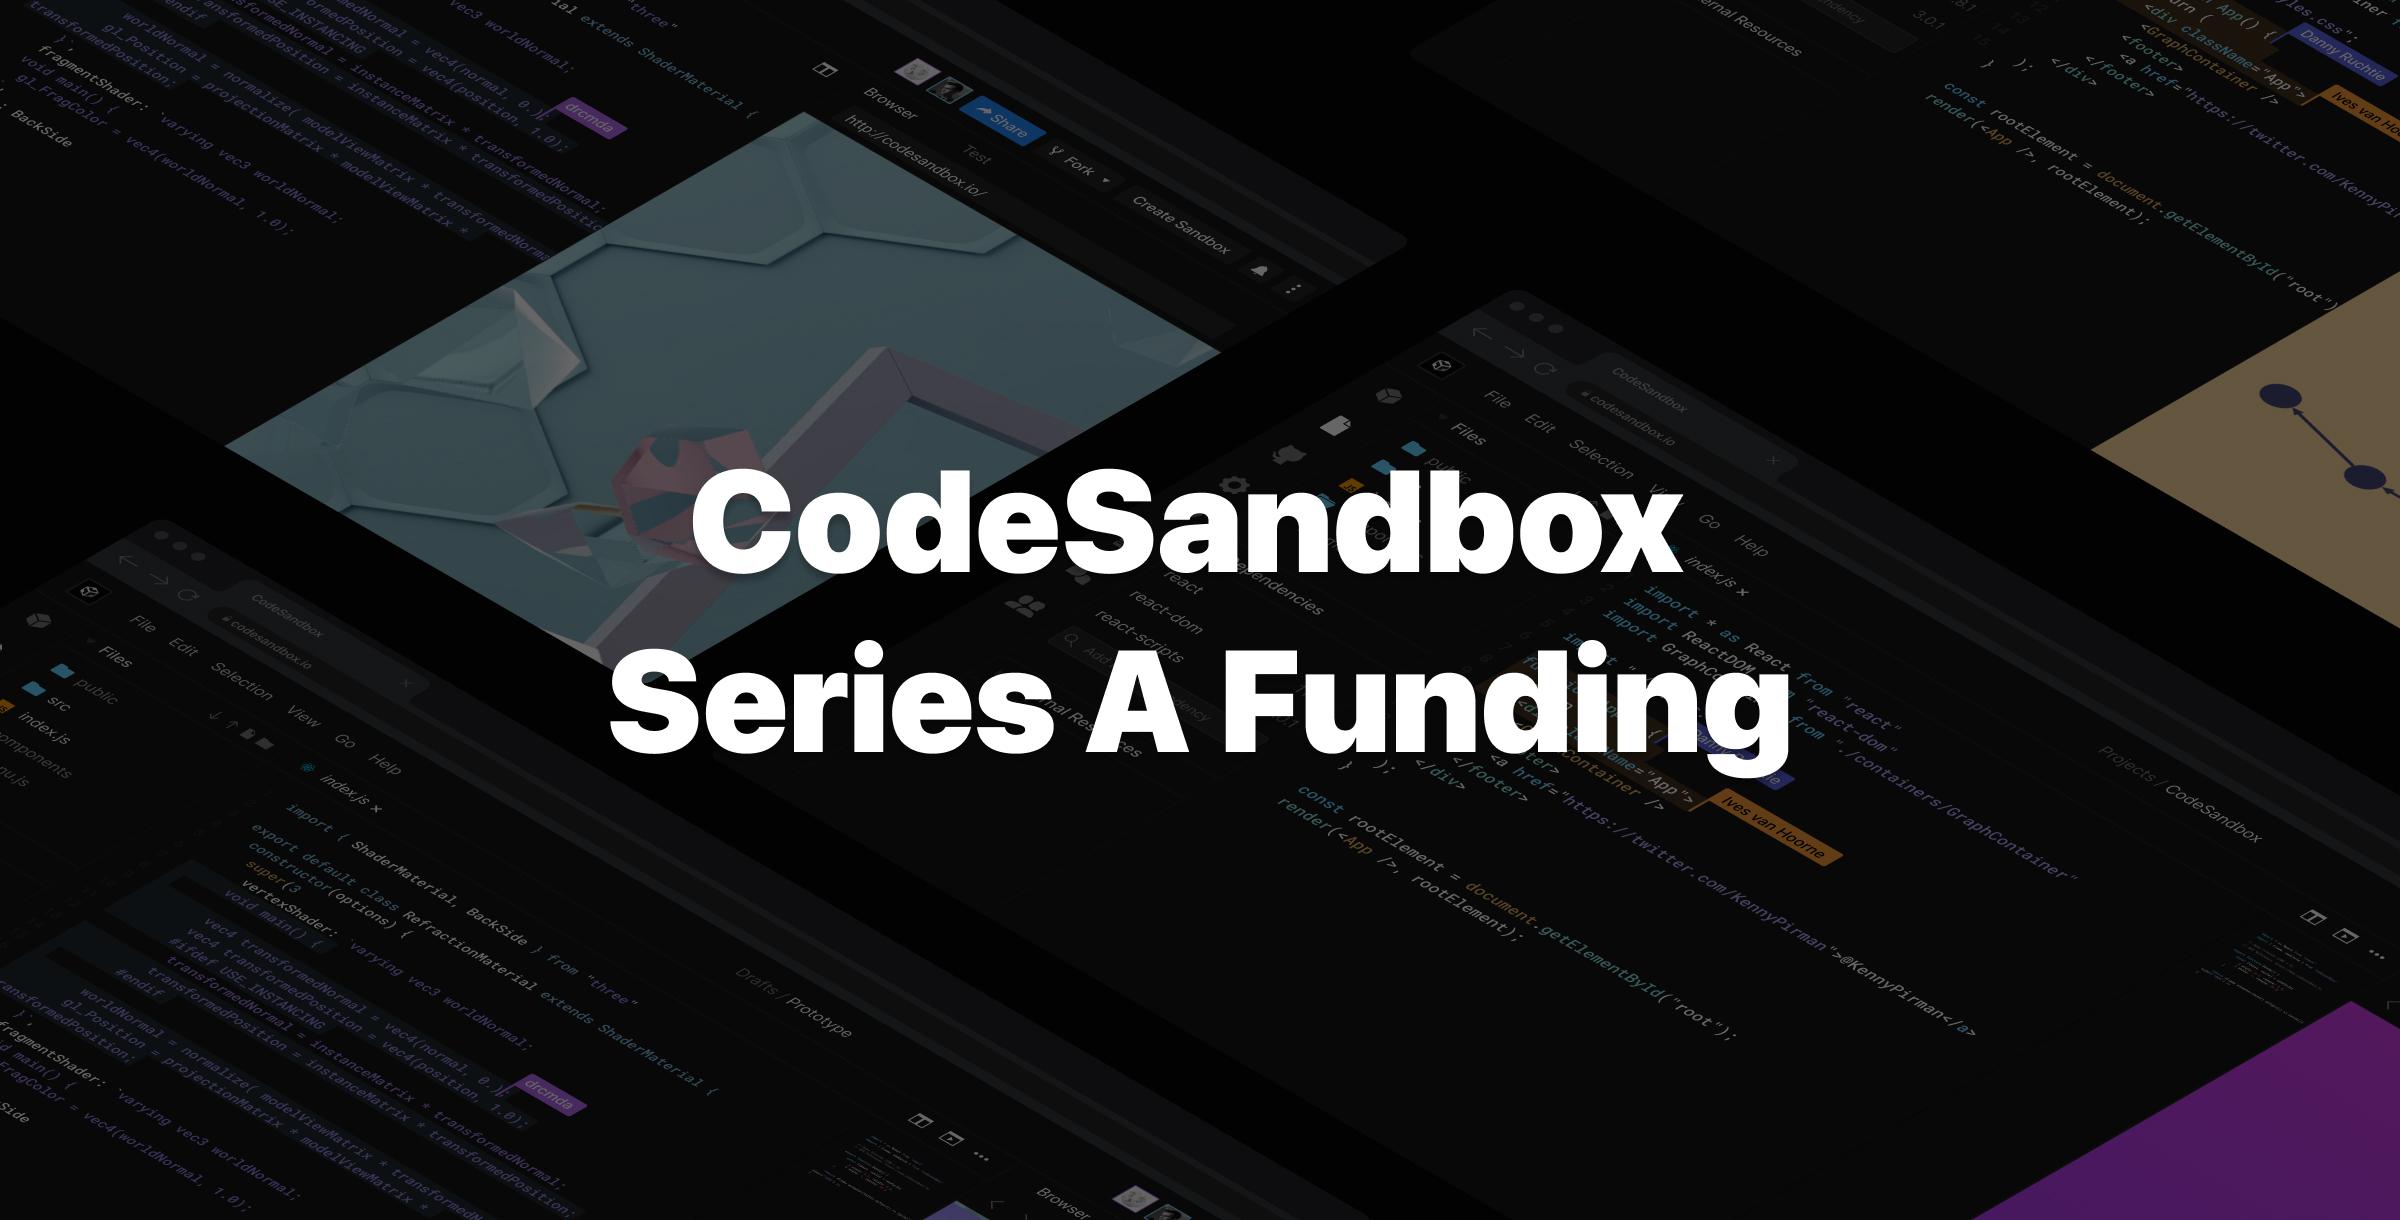 CodeSandbox Secures $12.7M Series A Funding